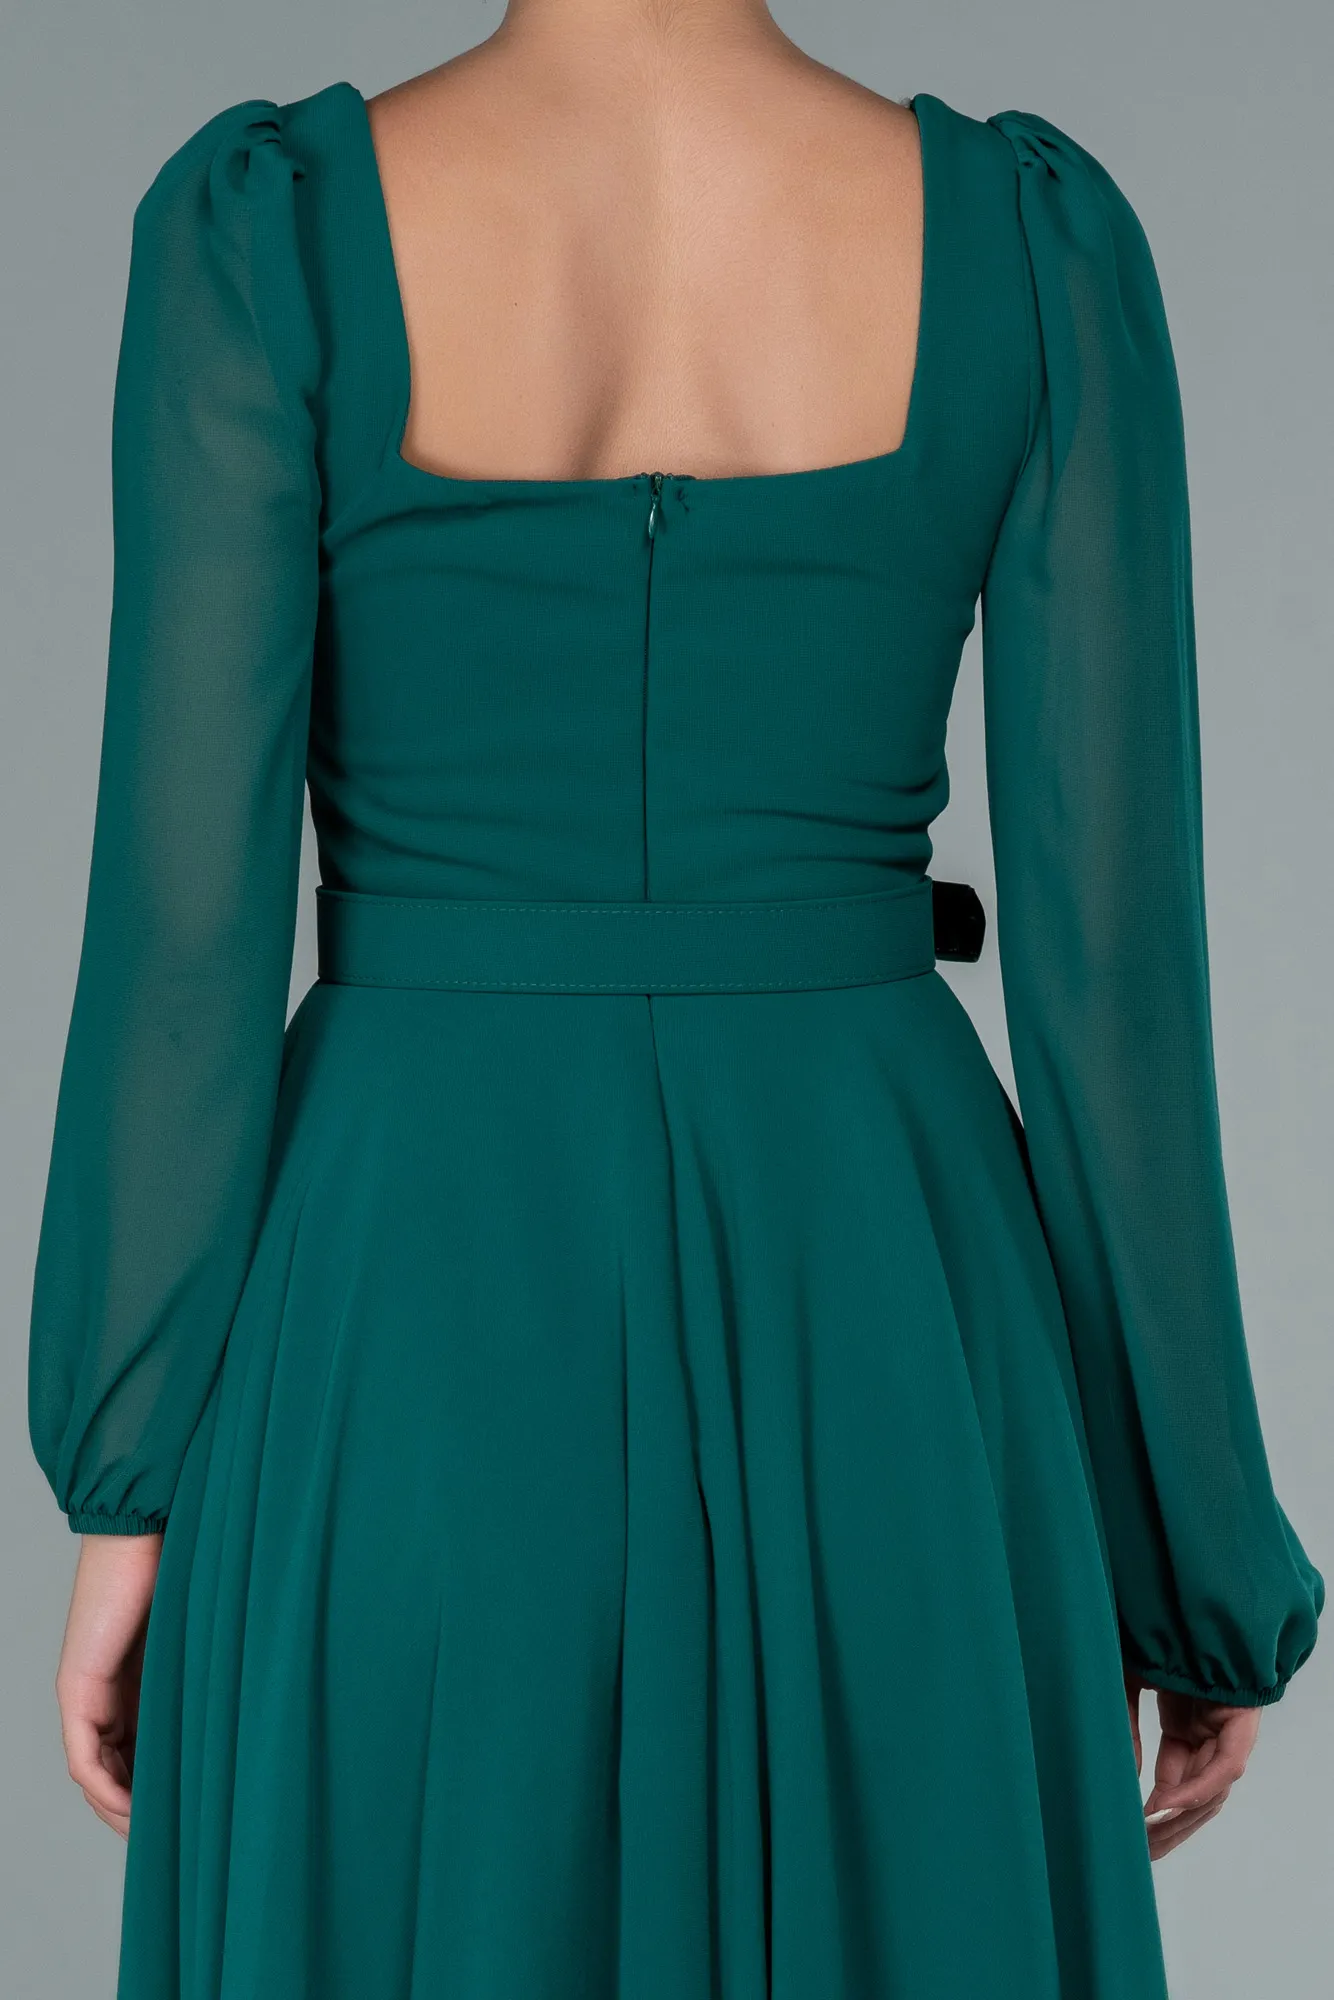 Emerald Green-Midi Chiffon Invitation Dress ABK1441